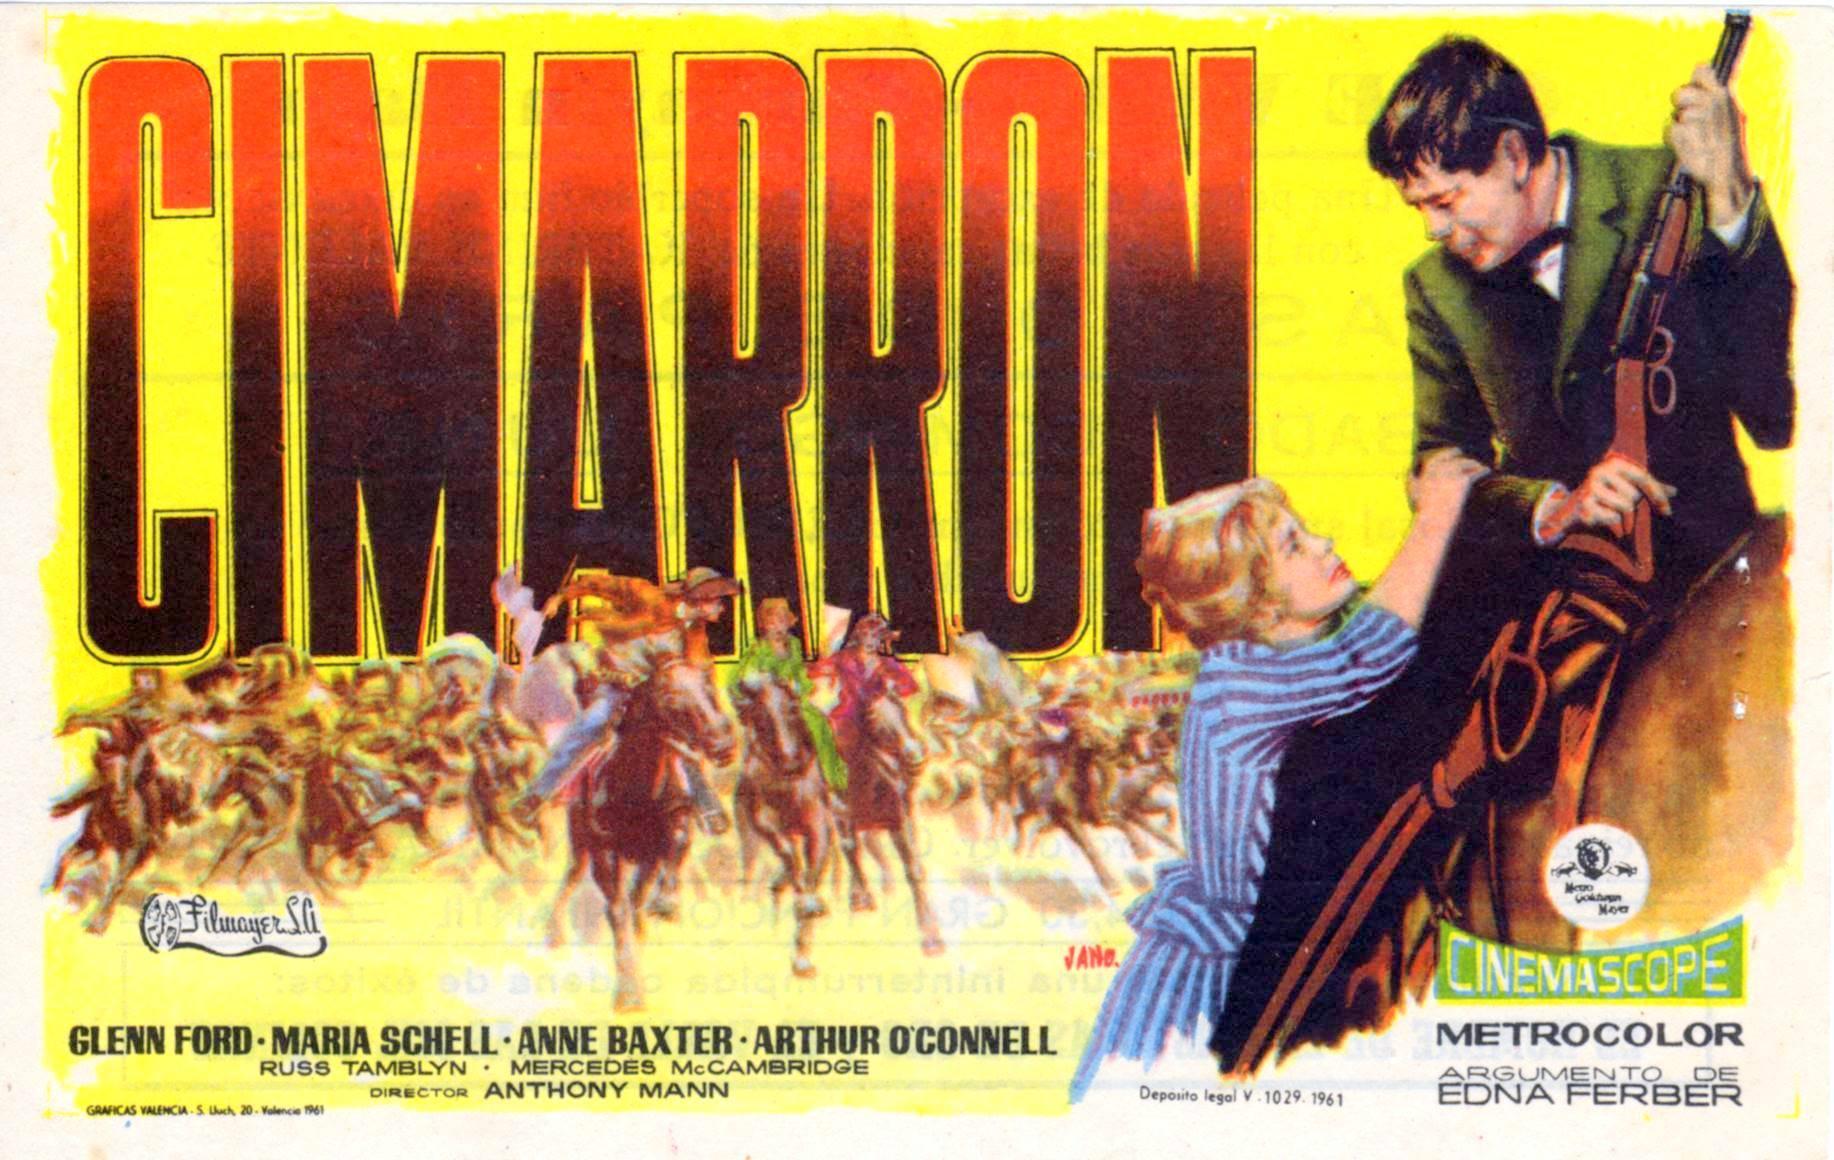 Постер фильма Симаррон | Cimarron